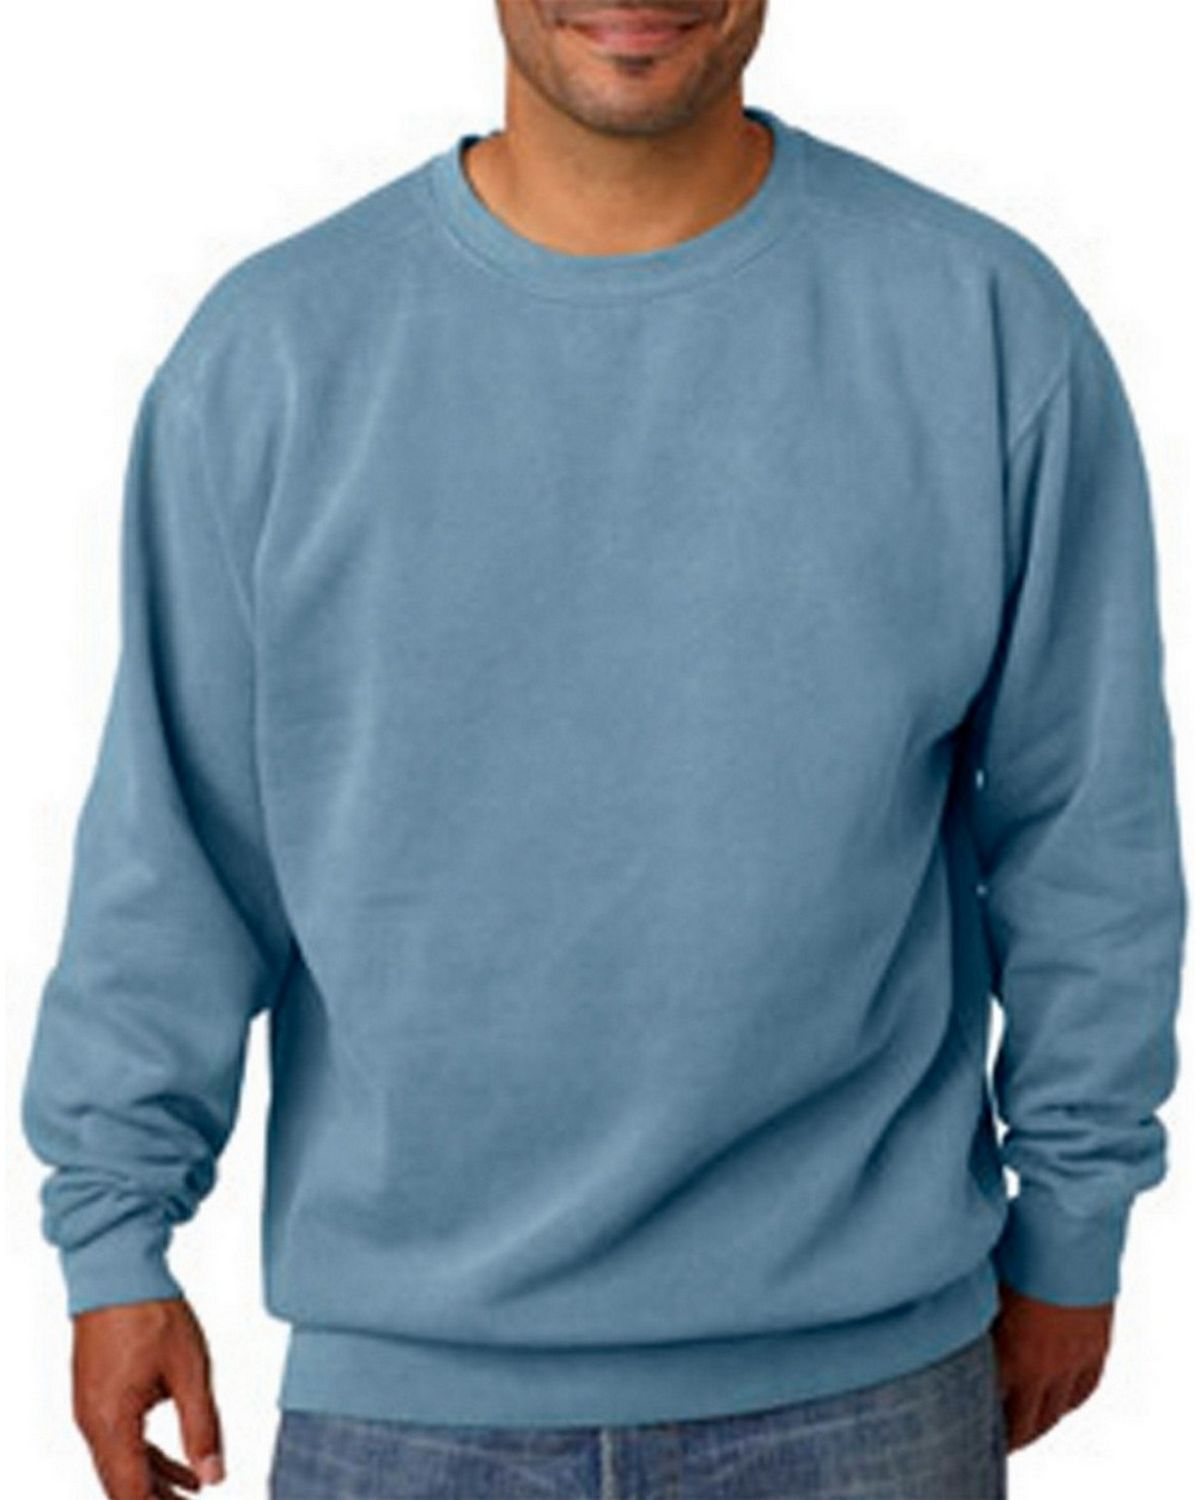 Chouinard 1566 Adult Garment-Dyed Crew Neck Sweatshirt - ApparelnBags.com